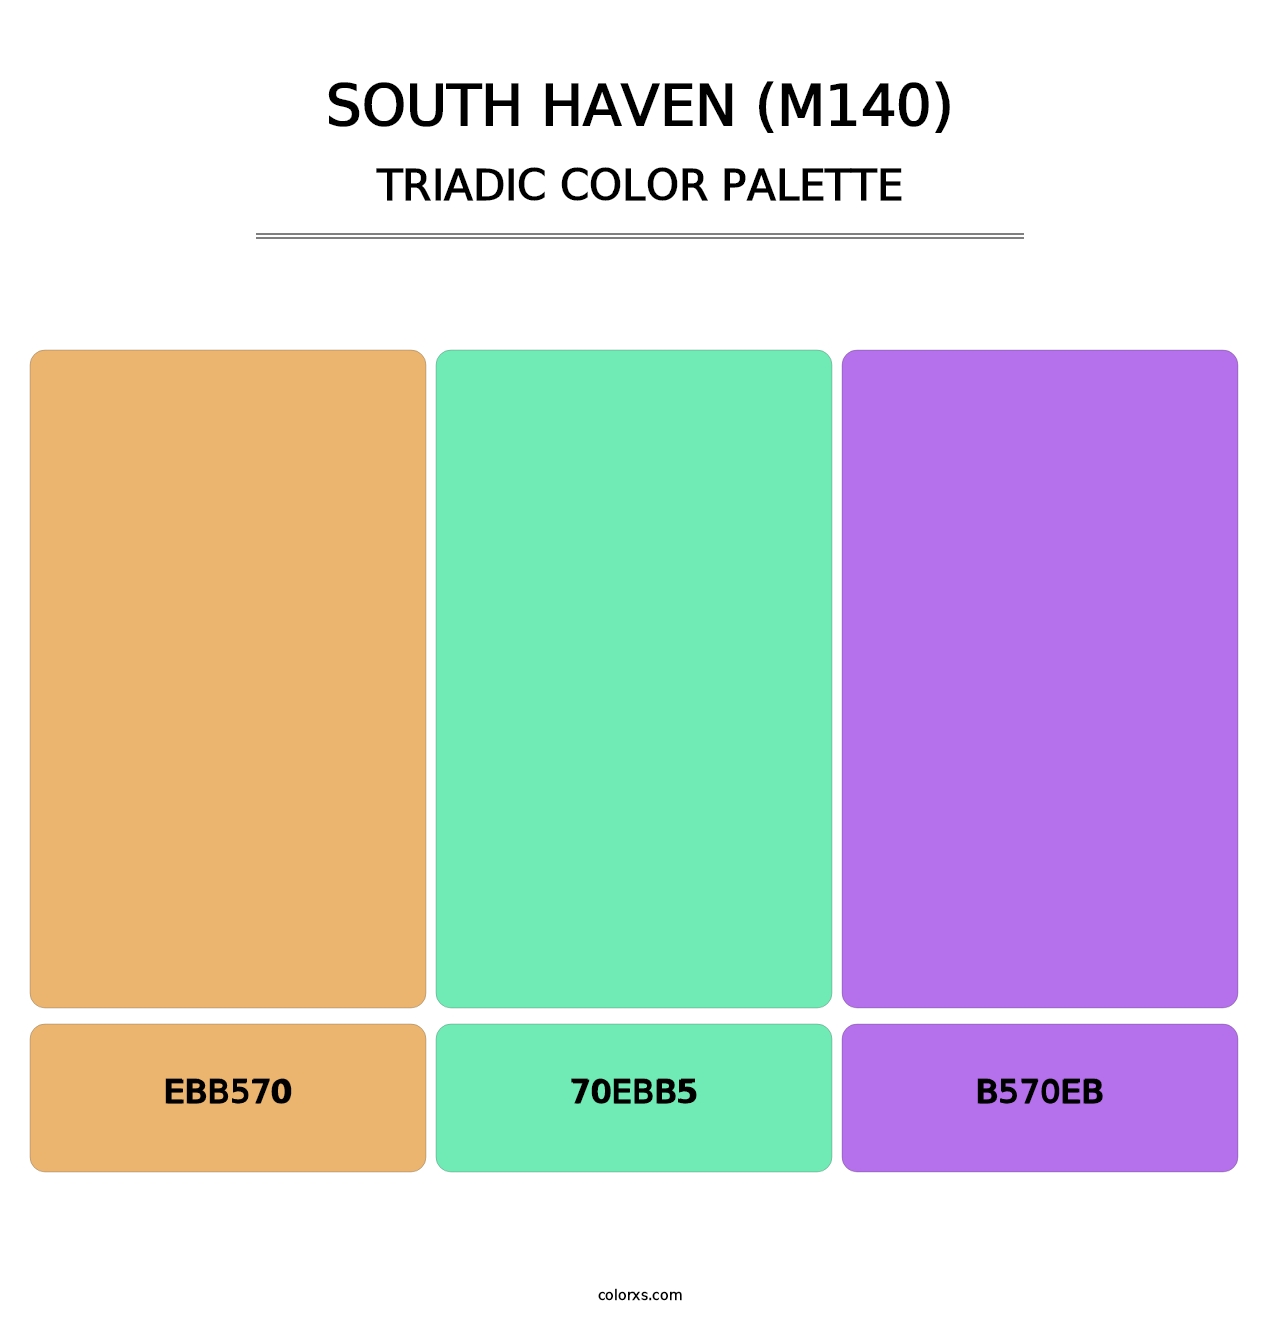 South Haven (M140) - Triadic Color Palette